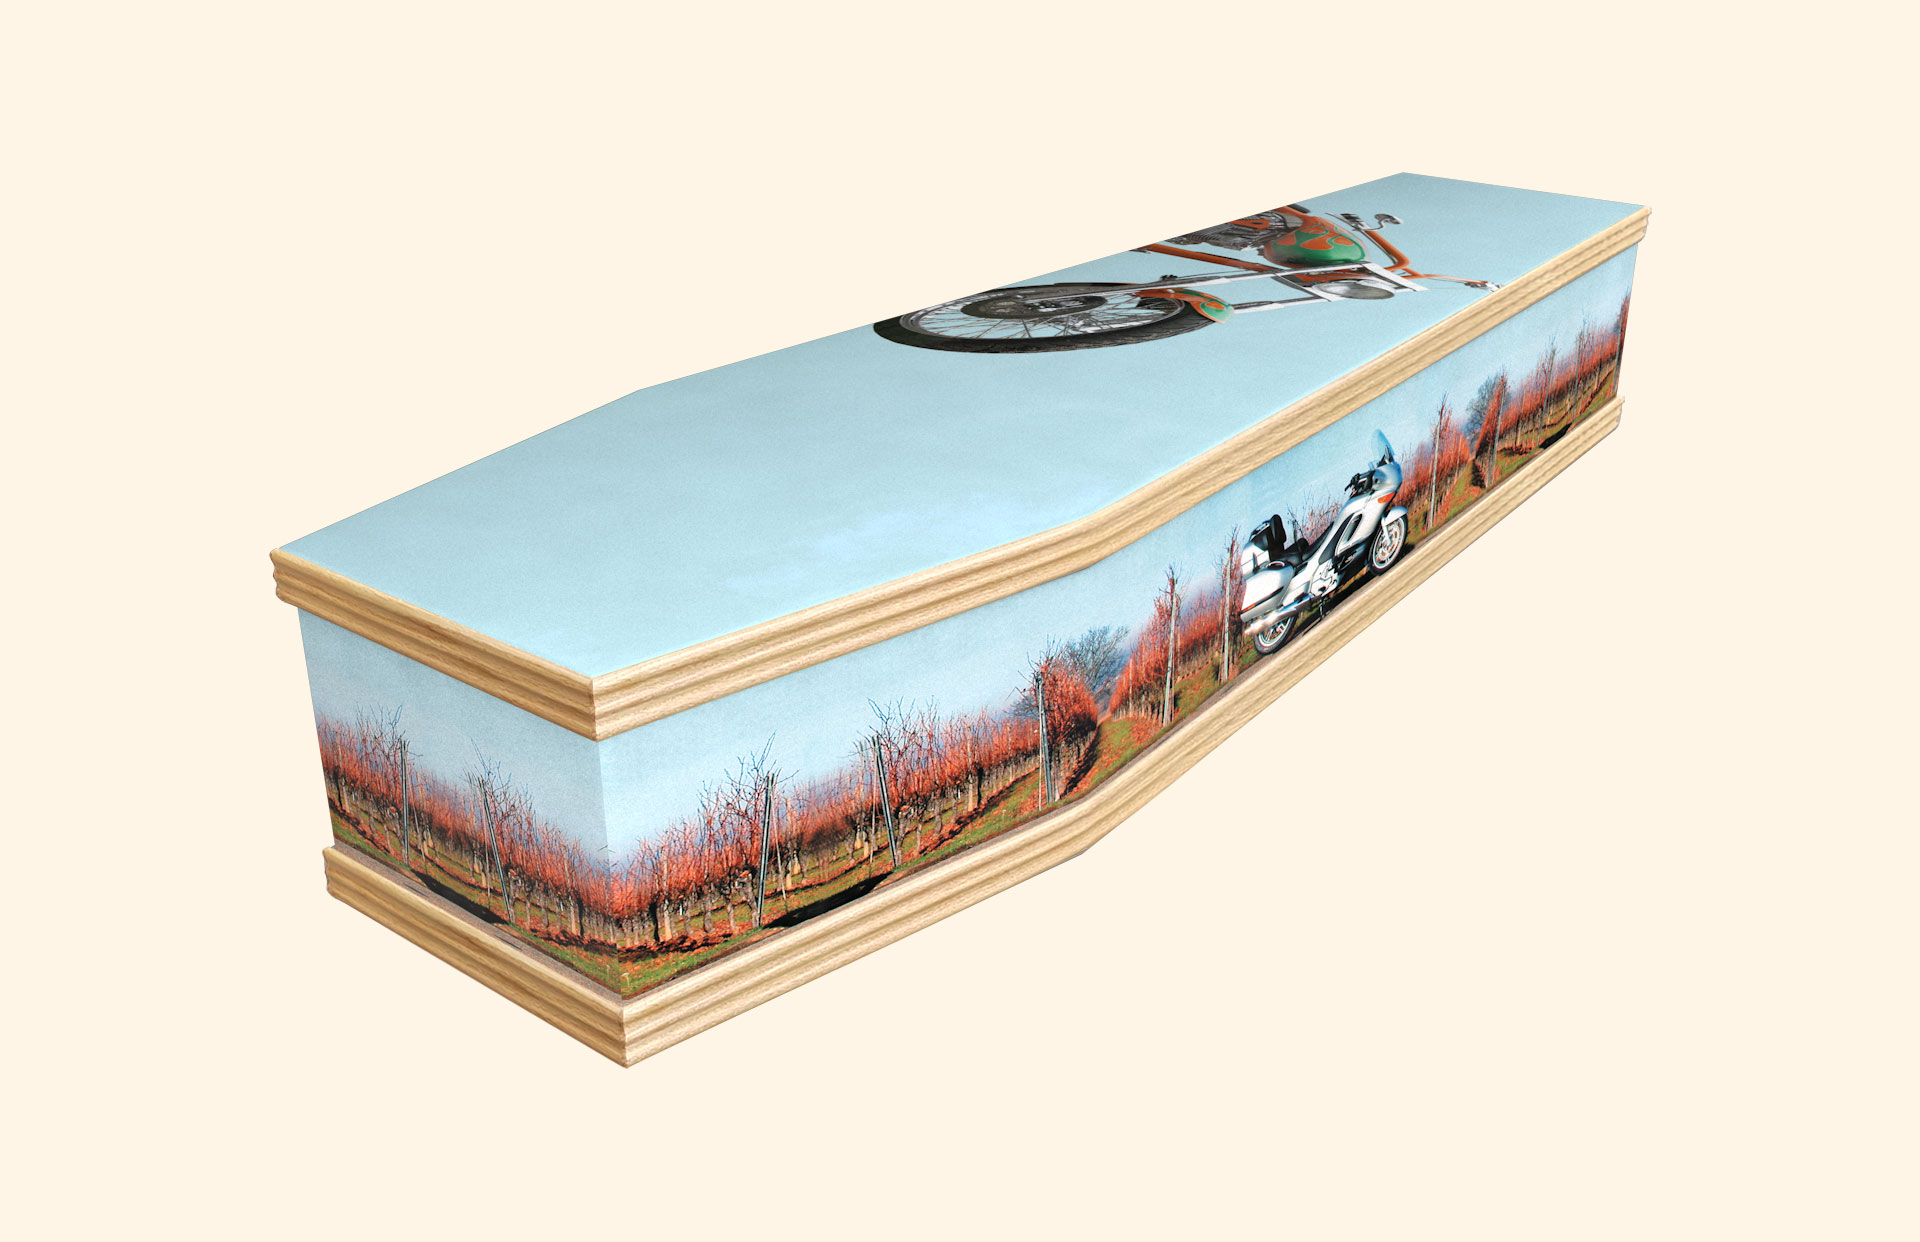 Easy Rider design on a classic coffin